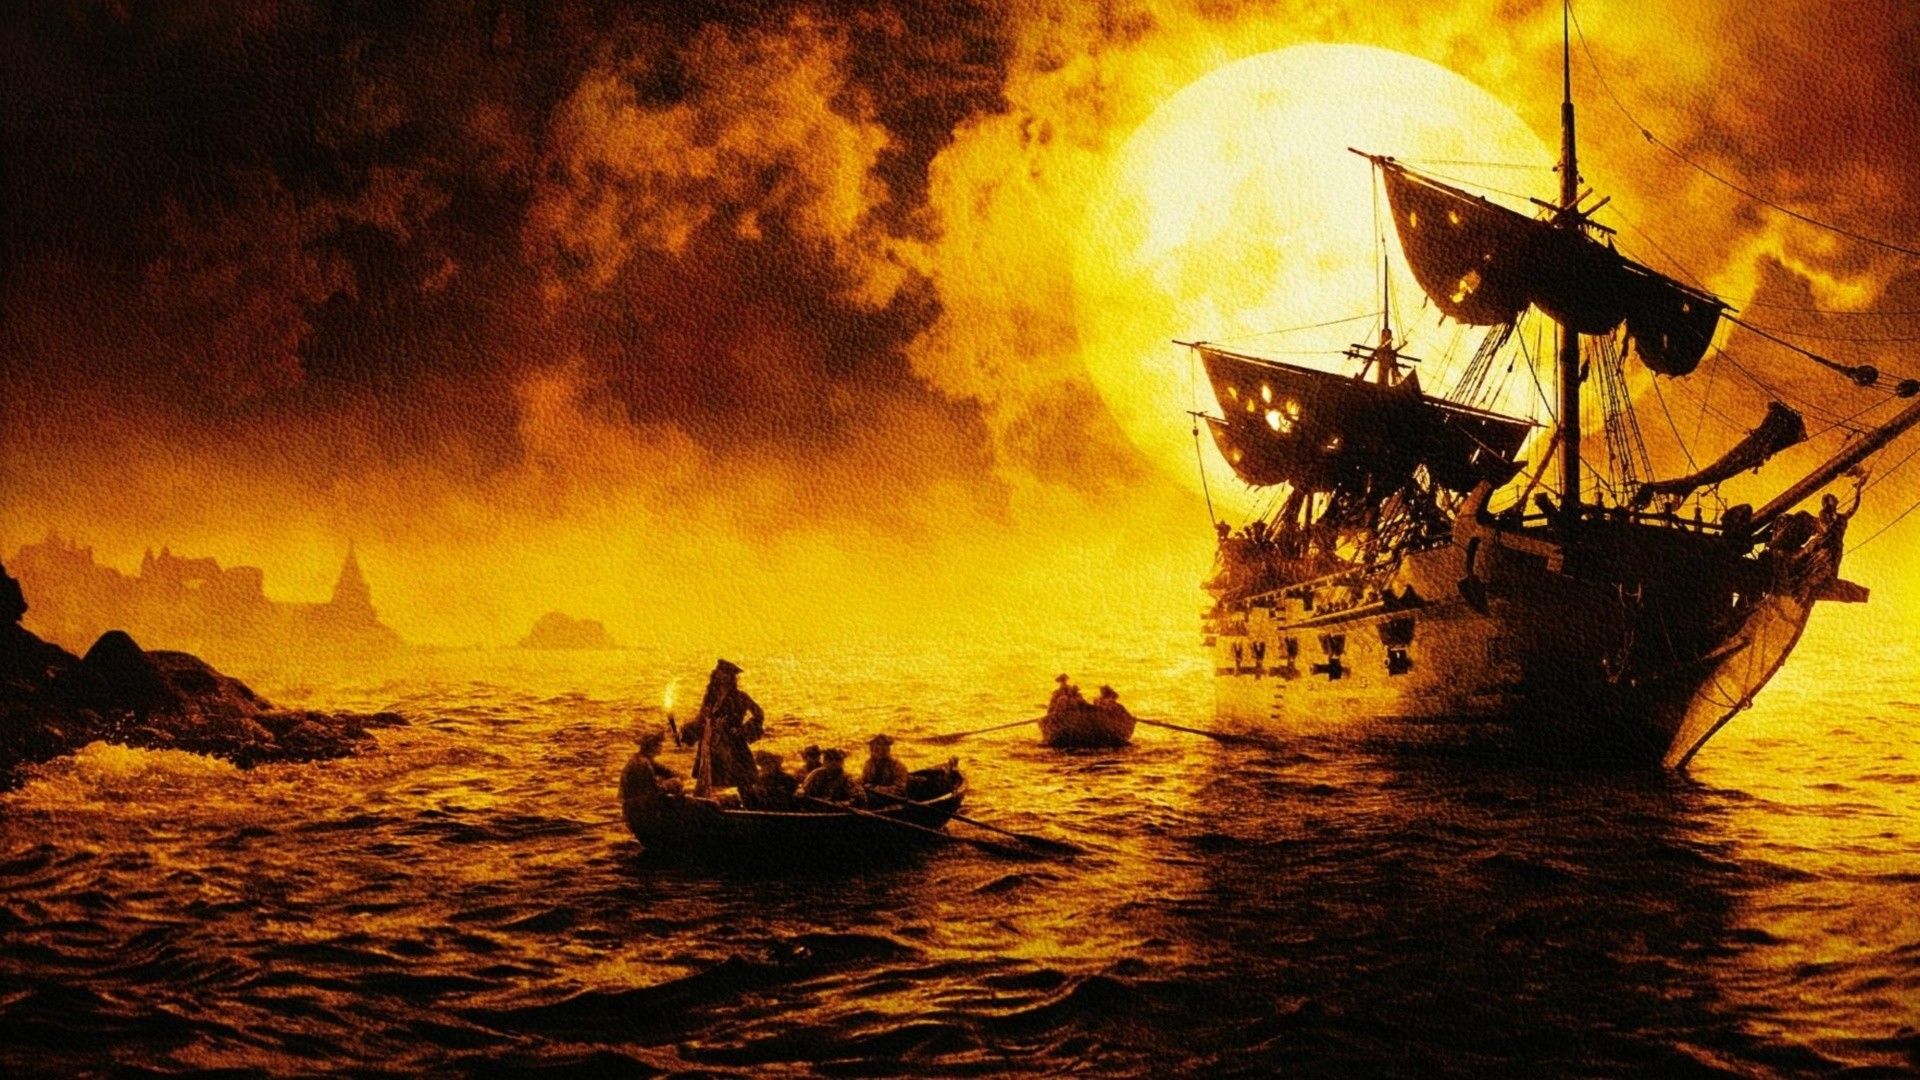 Pirates Of The Caribbean Desktop Wallpapers - Wallpaper Cave